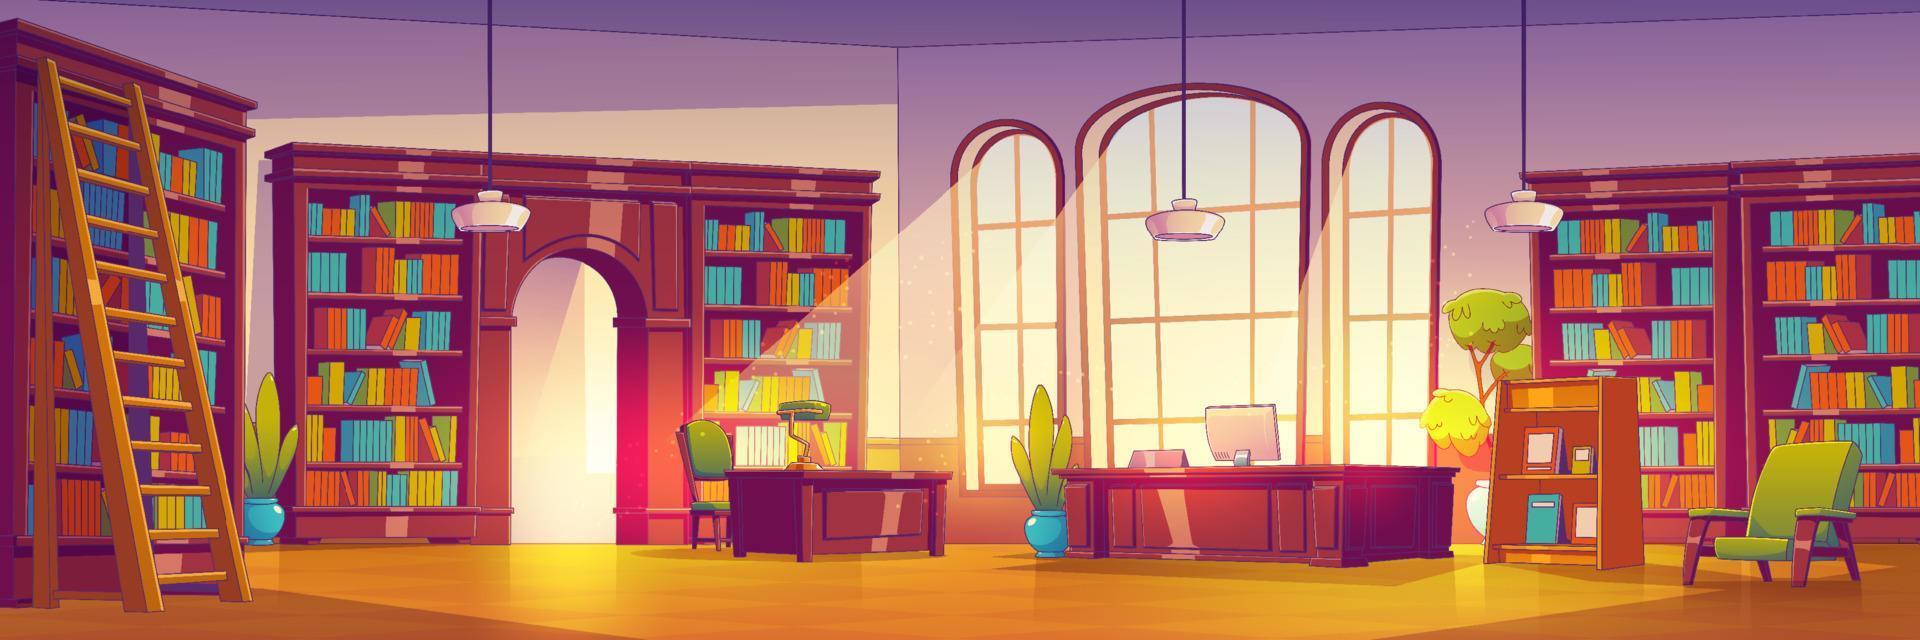 Cartoon library interior with many books vector